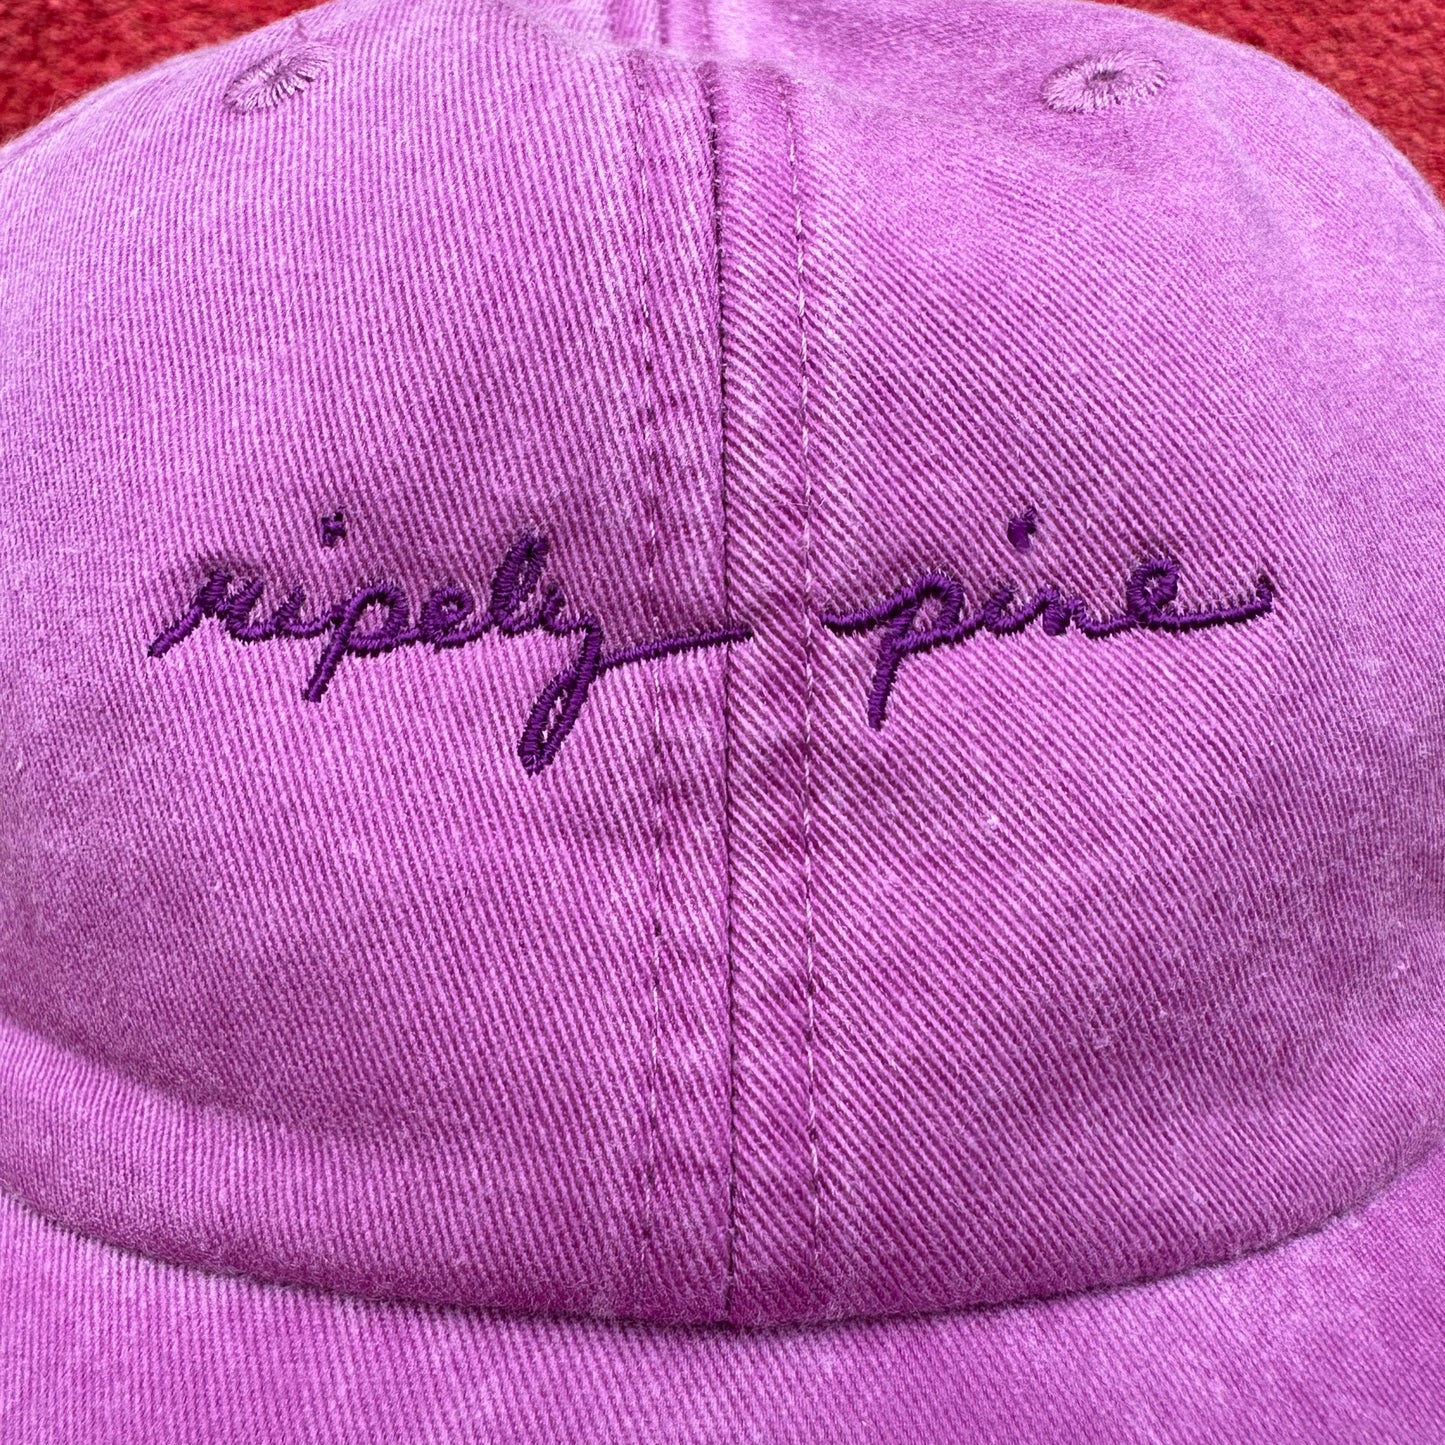 Ripely Pine Hat